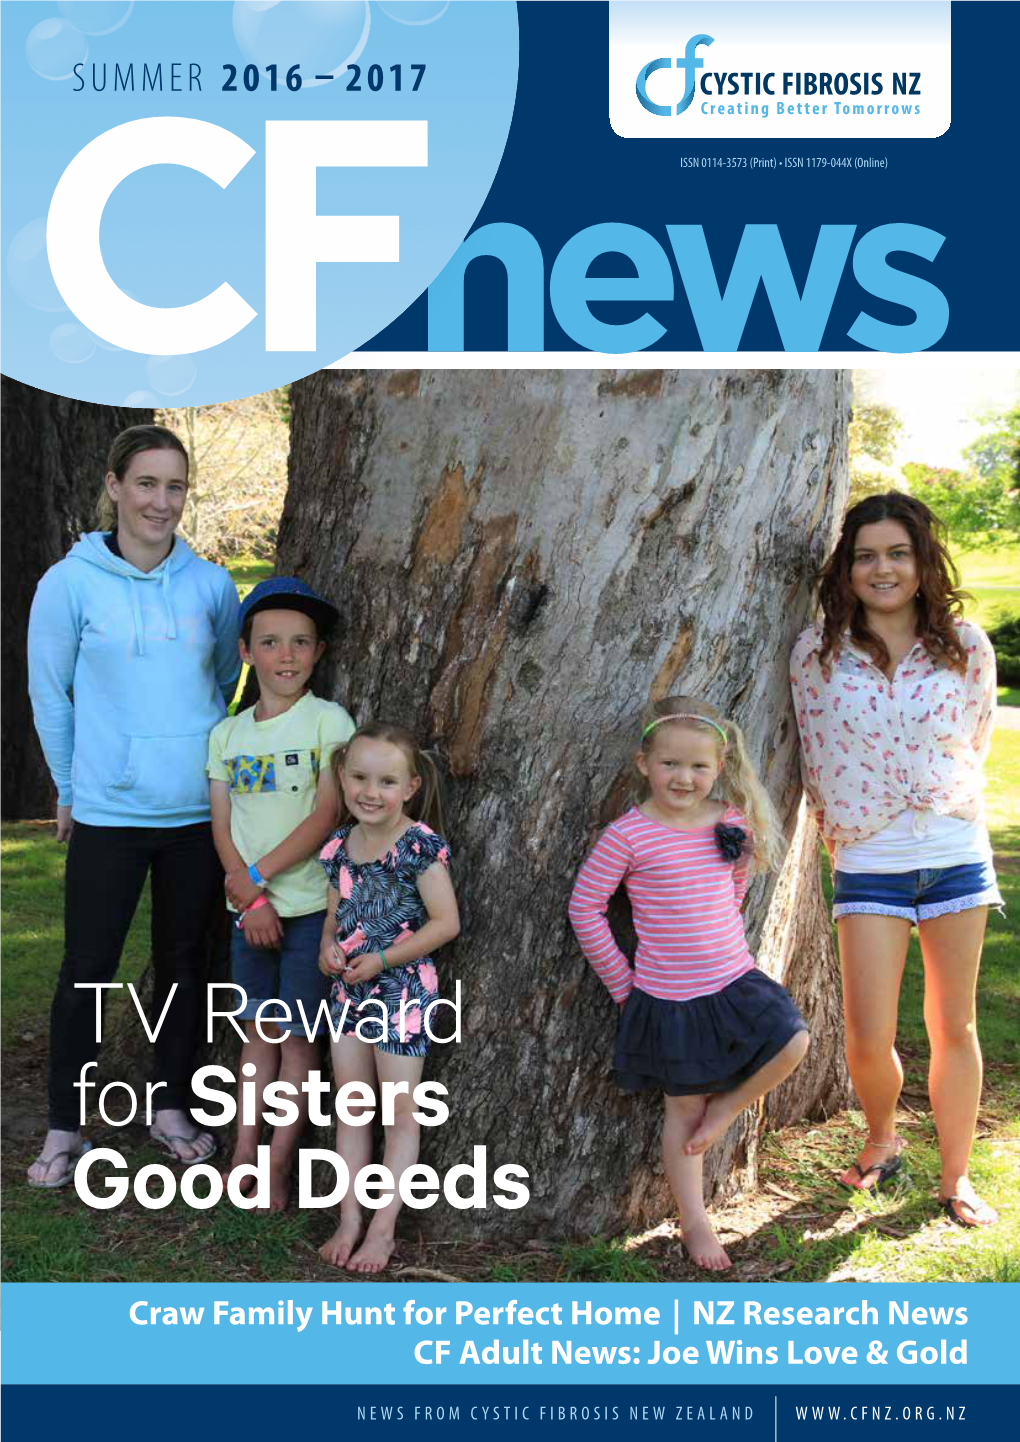 TV Reward for Sisters Good Deeds